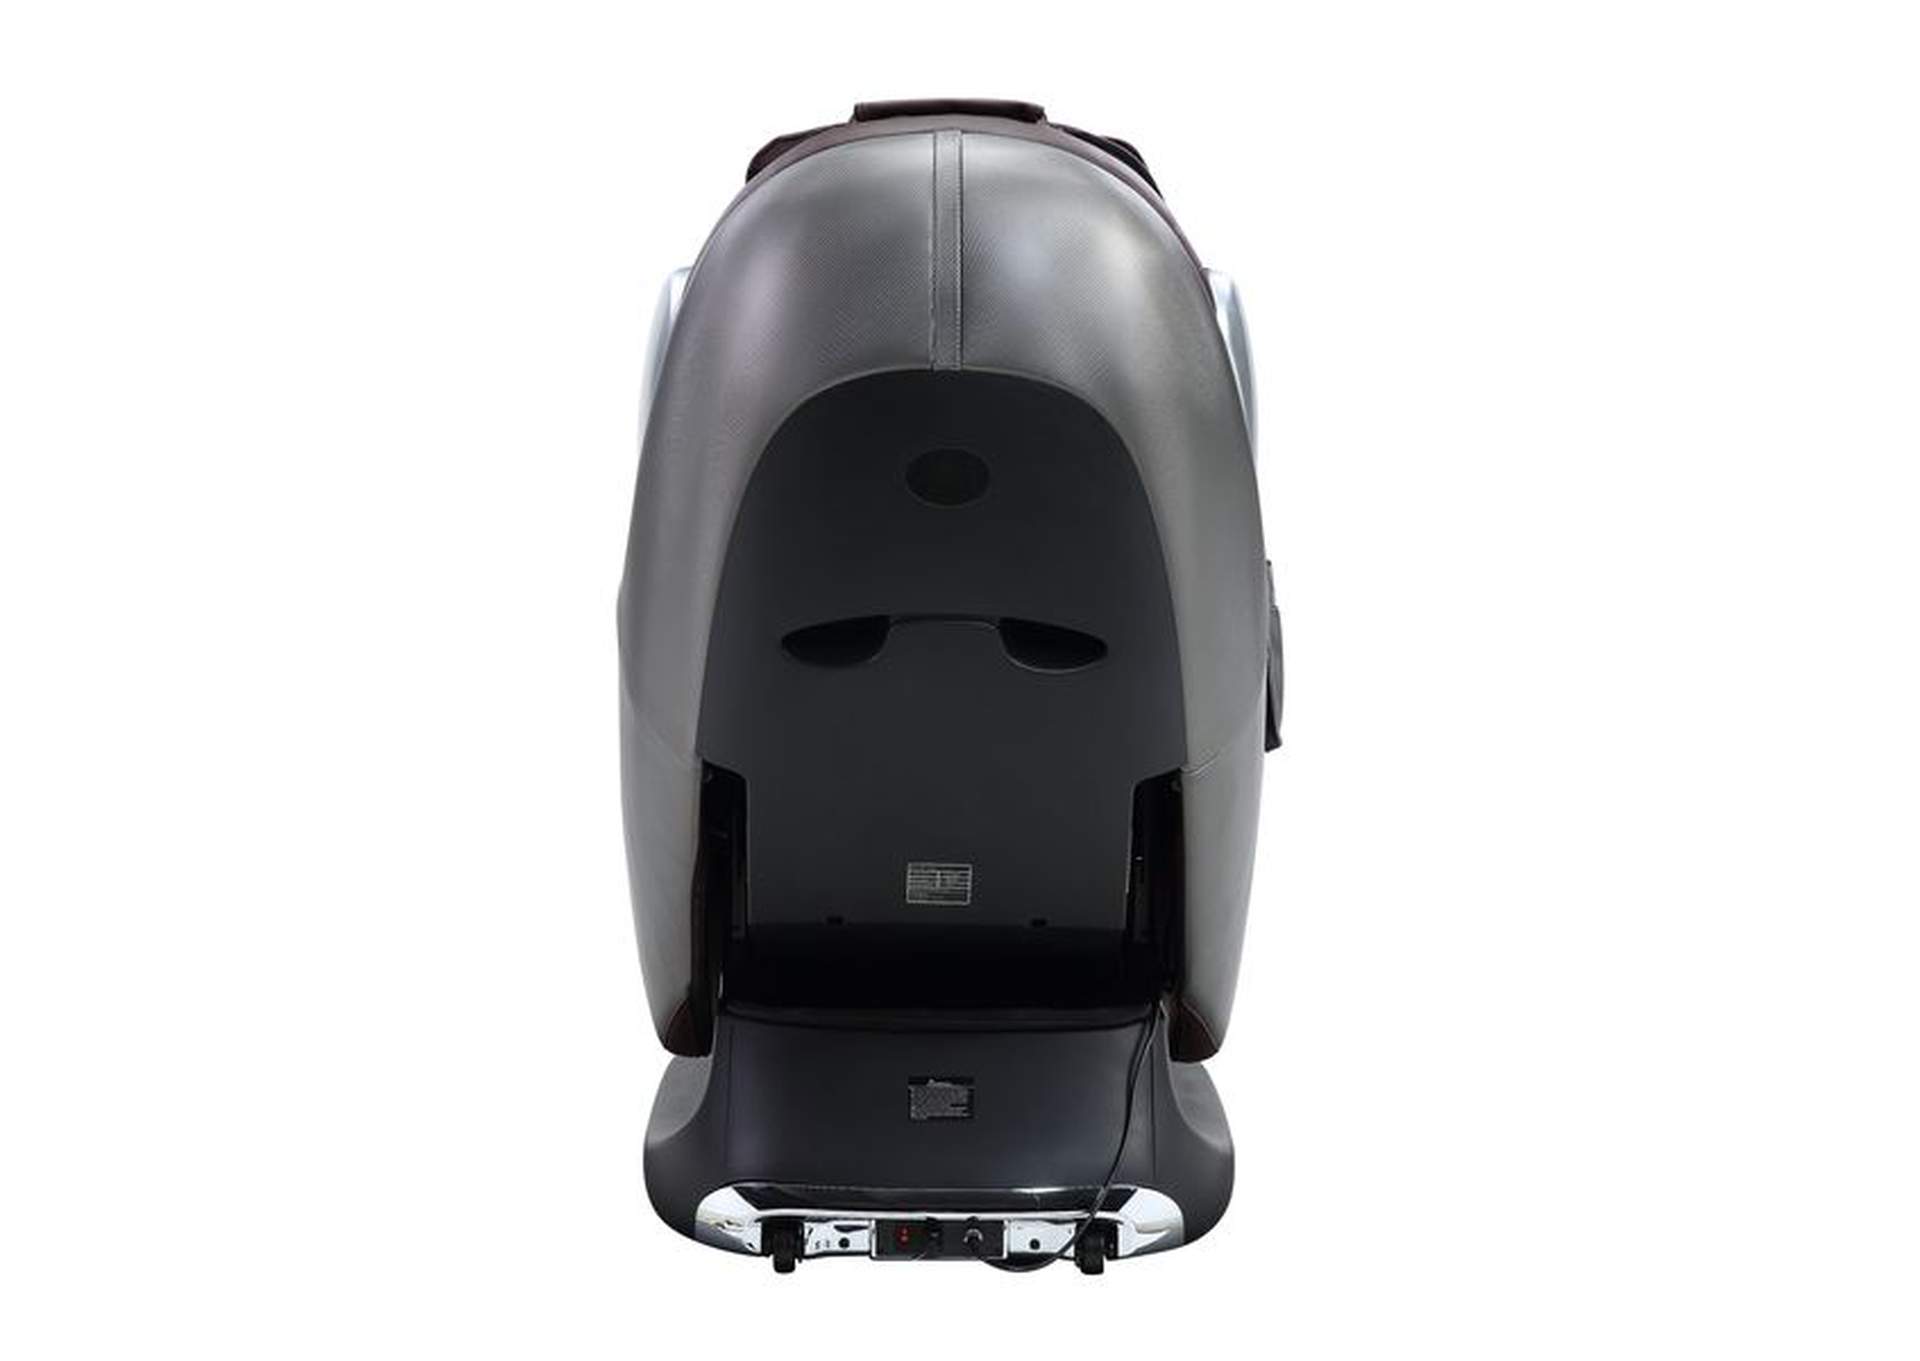 Pacari Chocolate Massage Chair,Acme